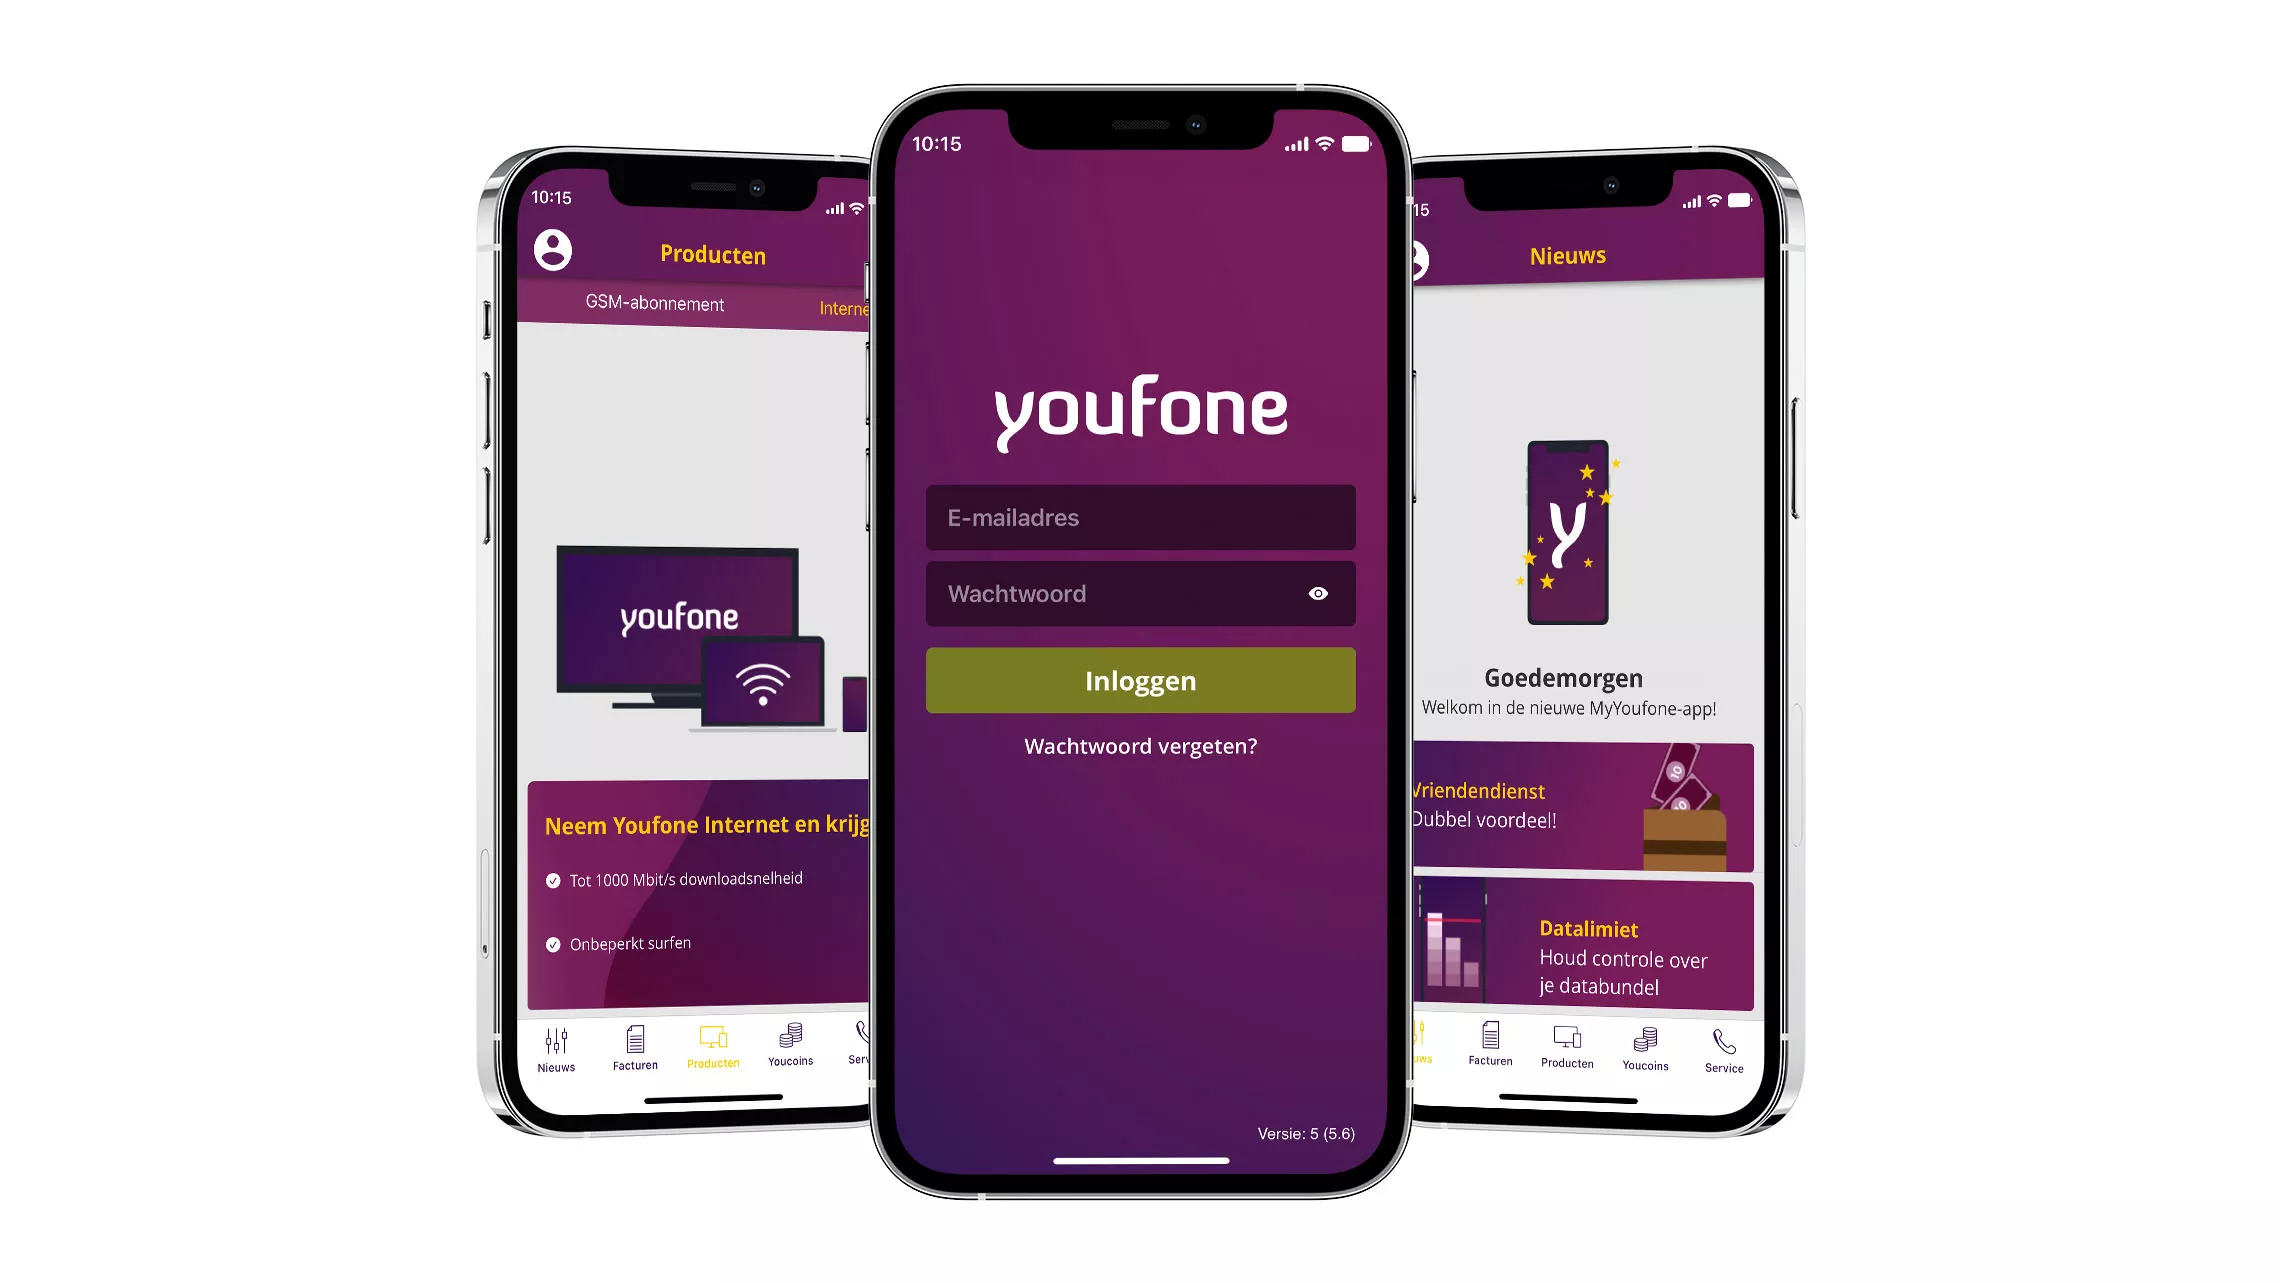 MyYoufone app